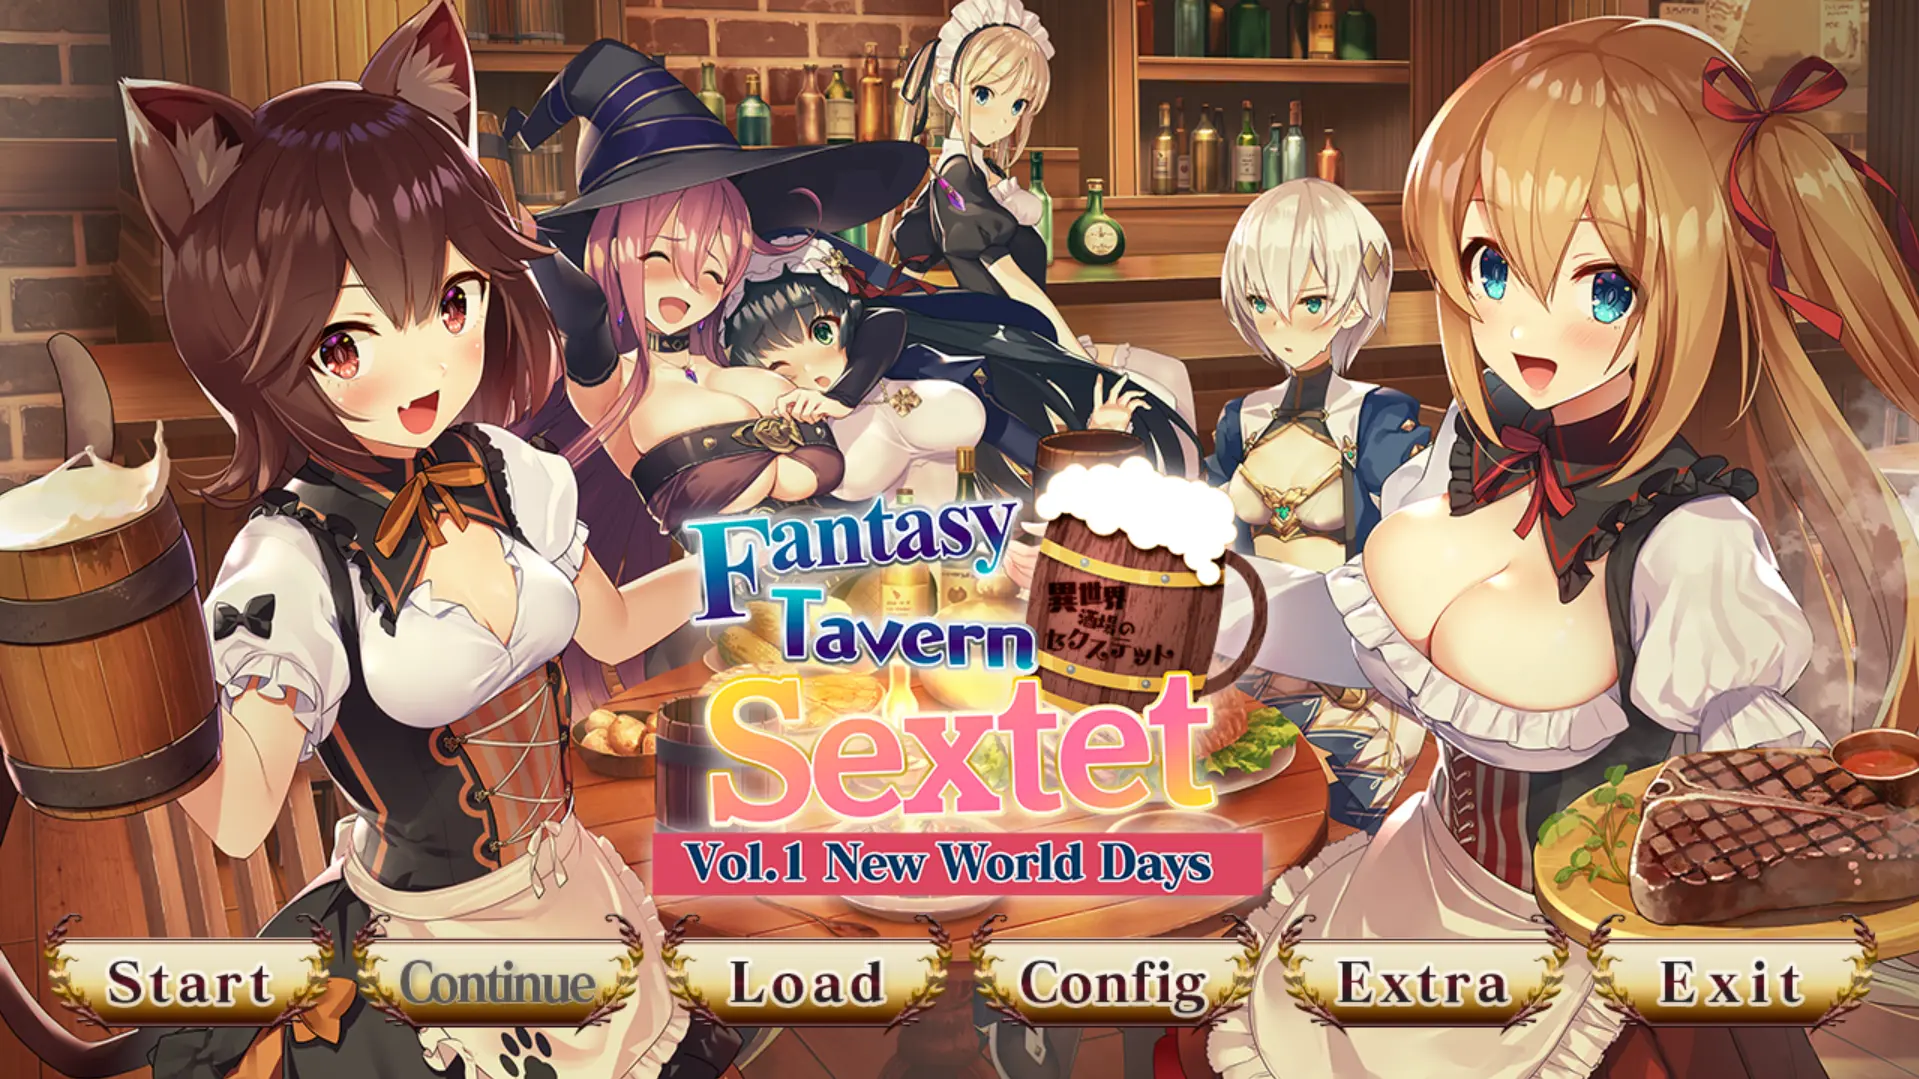 Fantasy Tavern Sextet -Vol.1 New World Days- [v1.0.0h] main image